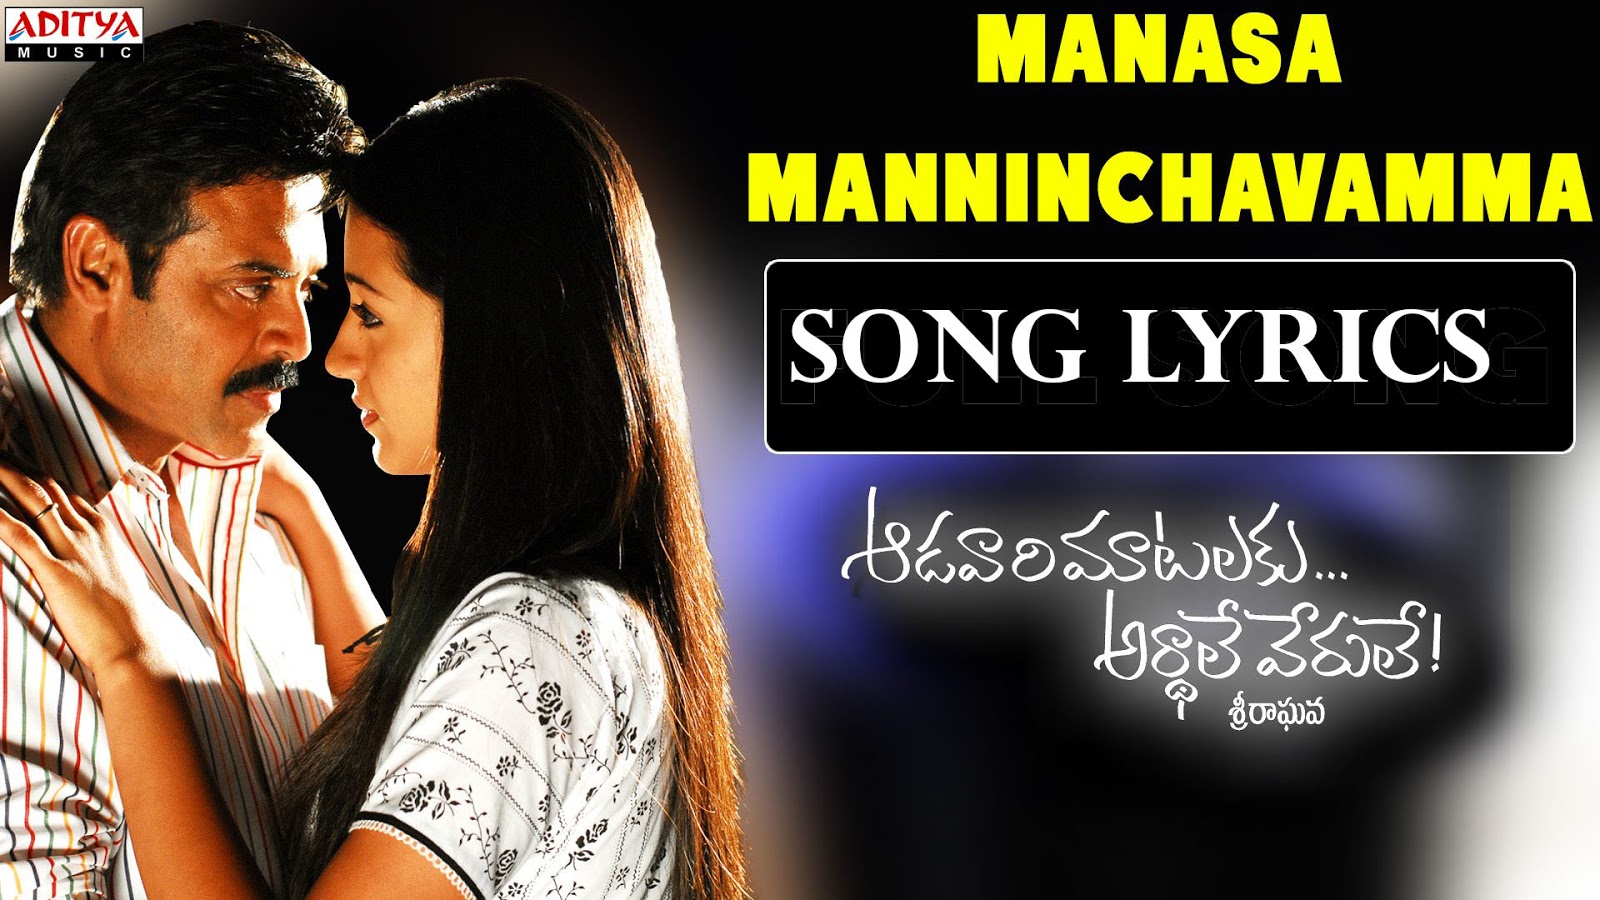 Manasa Manninchamma Song Lyrics from Aadavari Matalaku Ardhale Verule